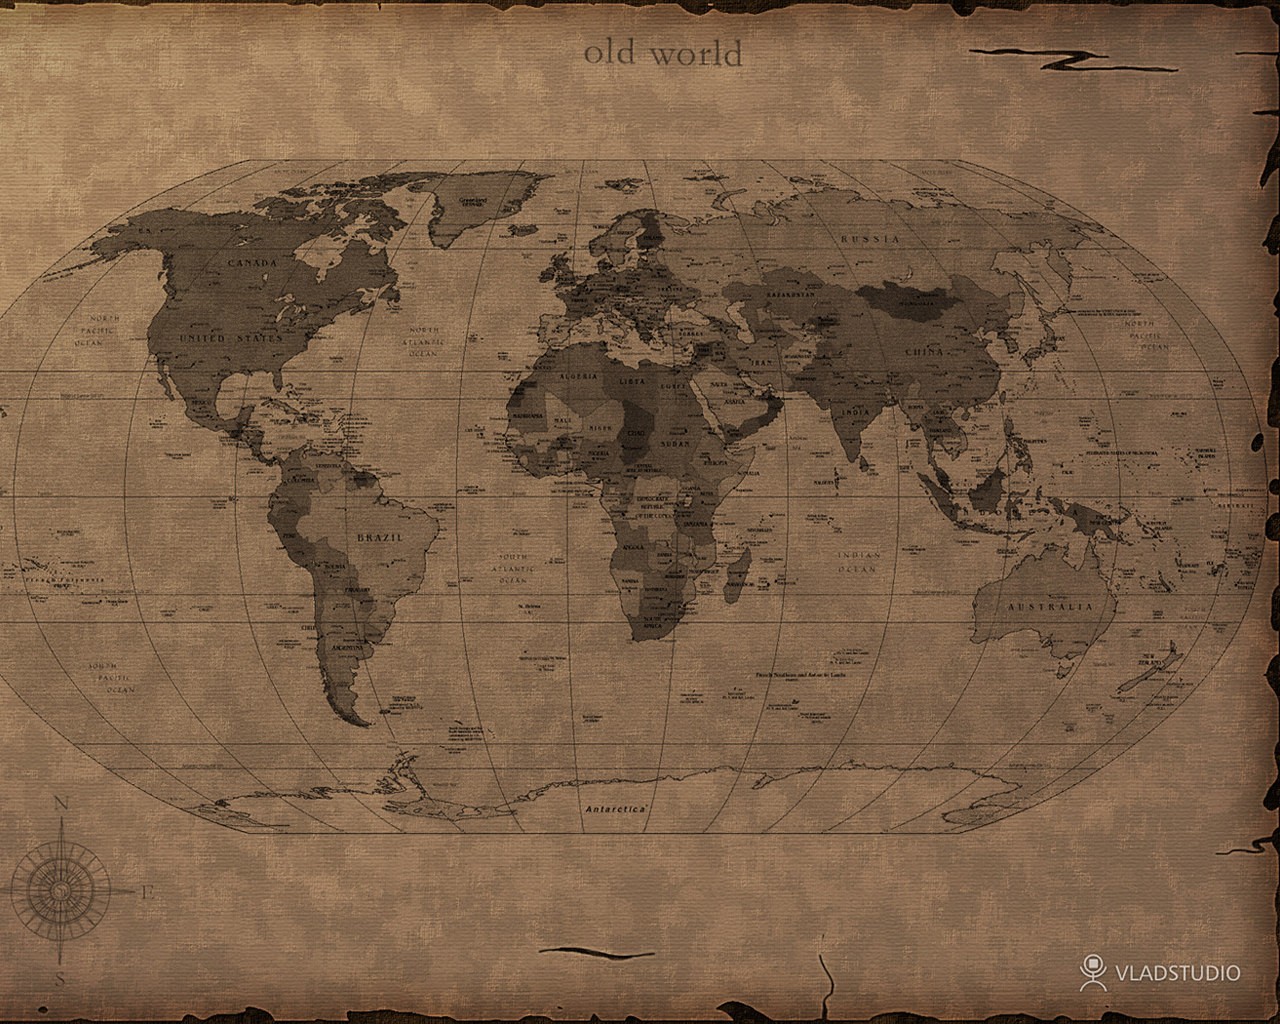 General 1280x1024 world map map paper beige Vladstudio